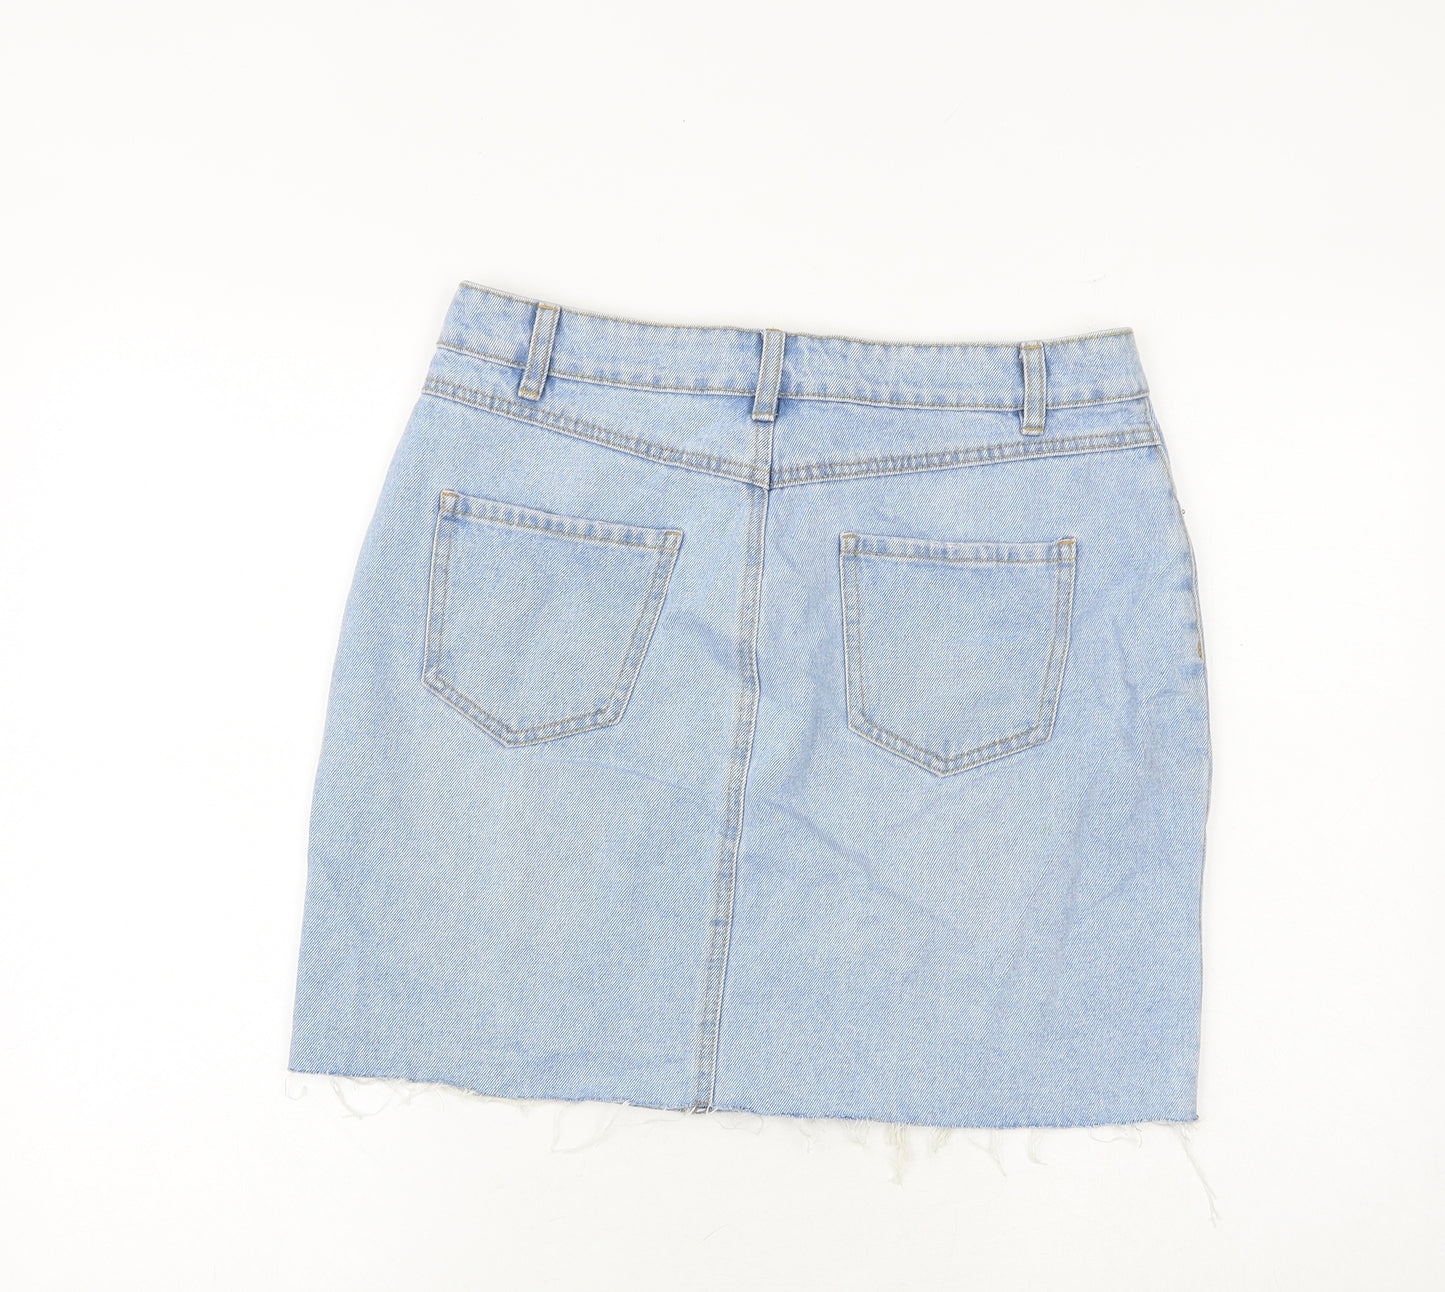 Dorothy Perkins Womens Blue Cotton Mini Skirt Size 12 Zip - Distressed